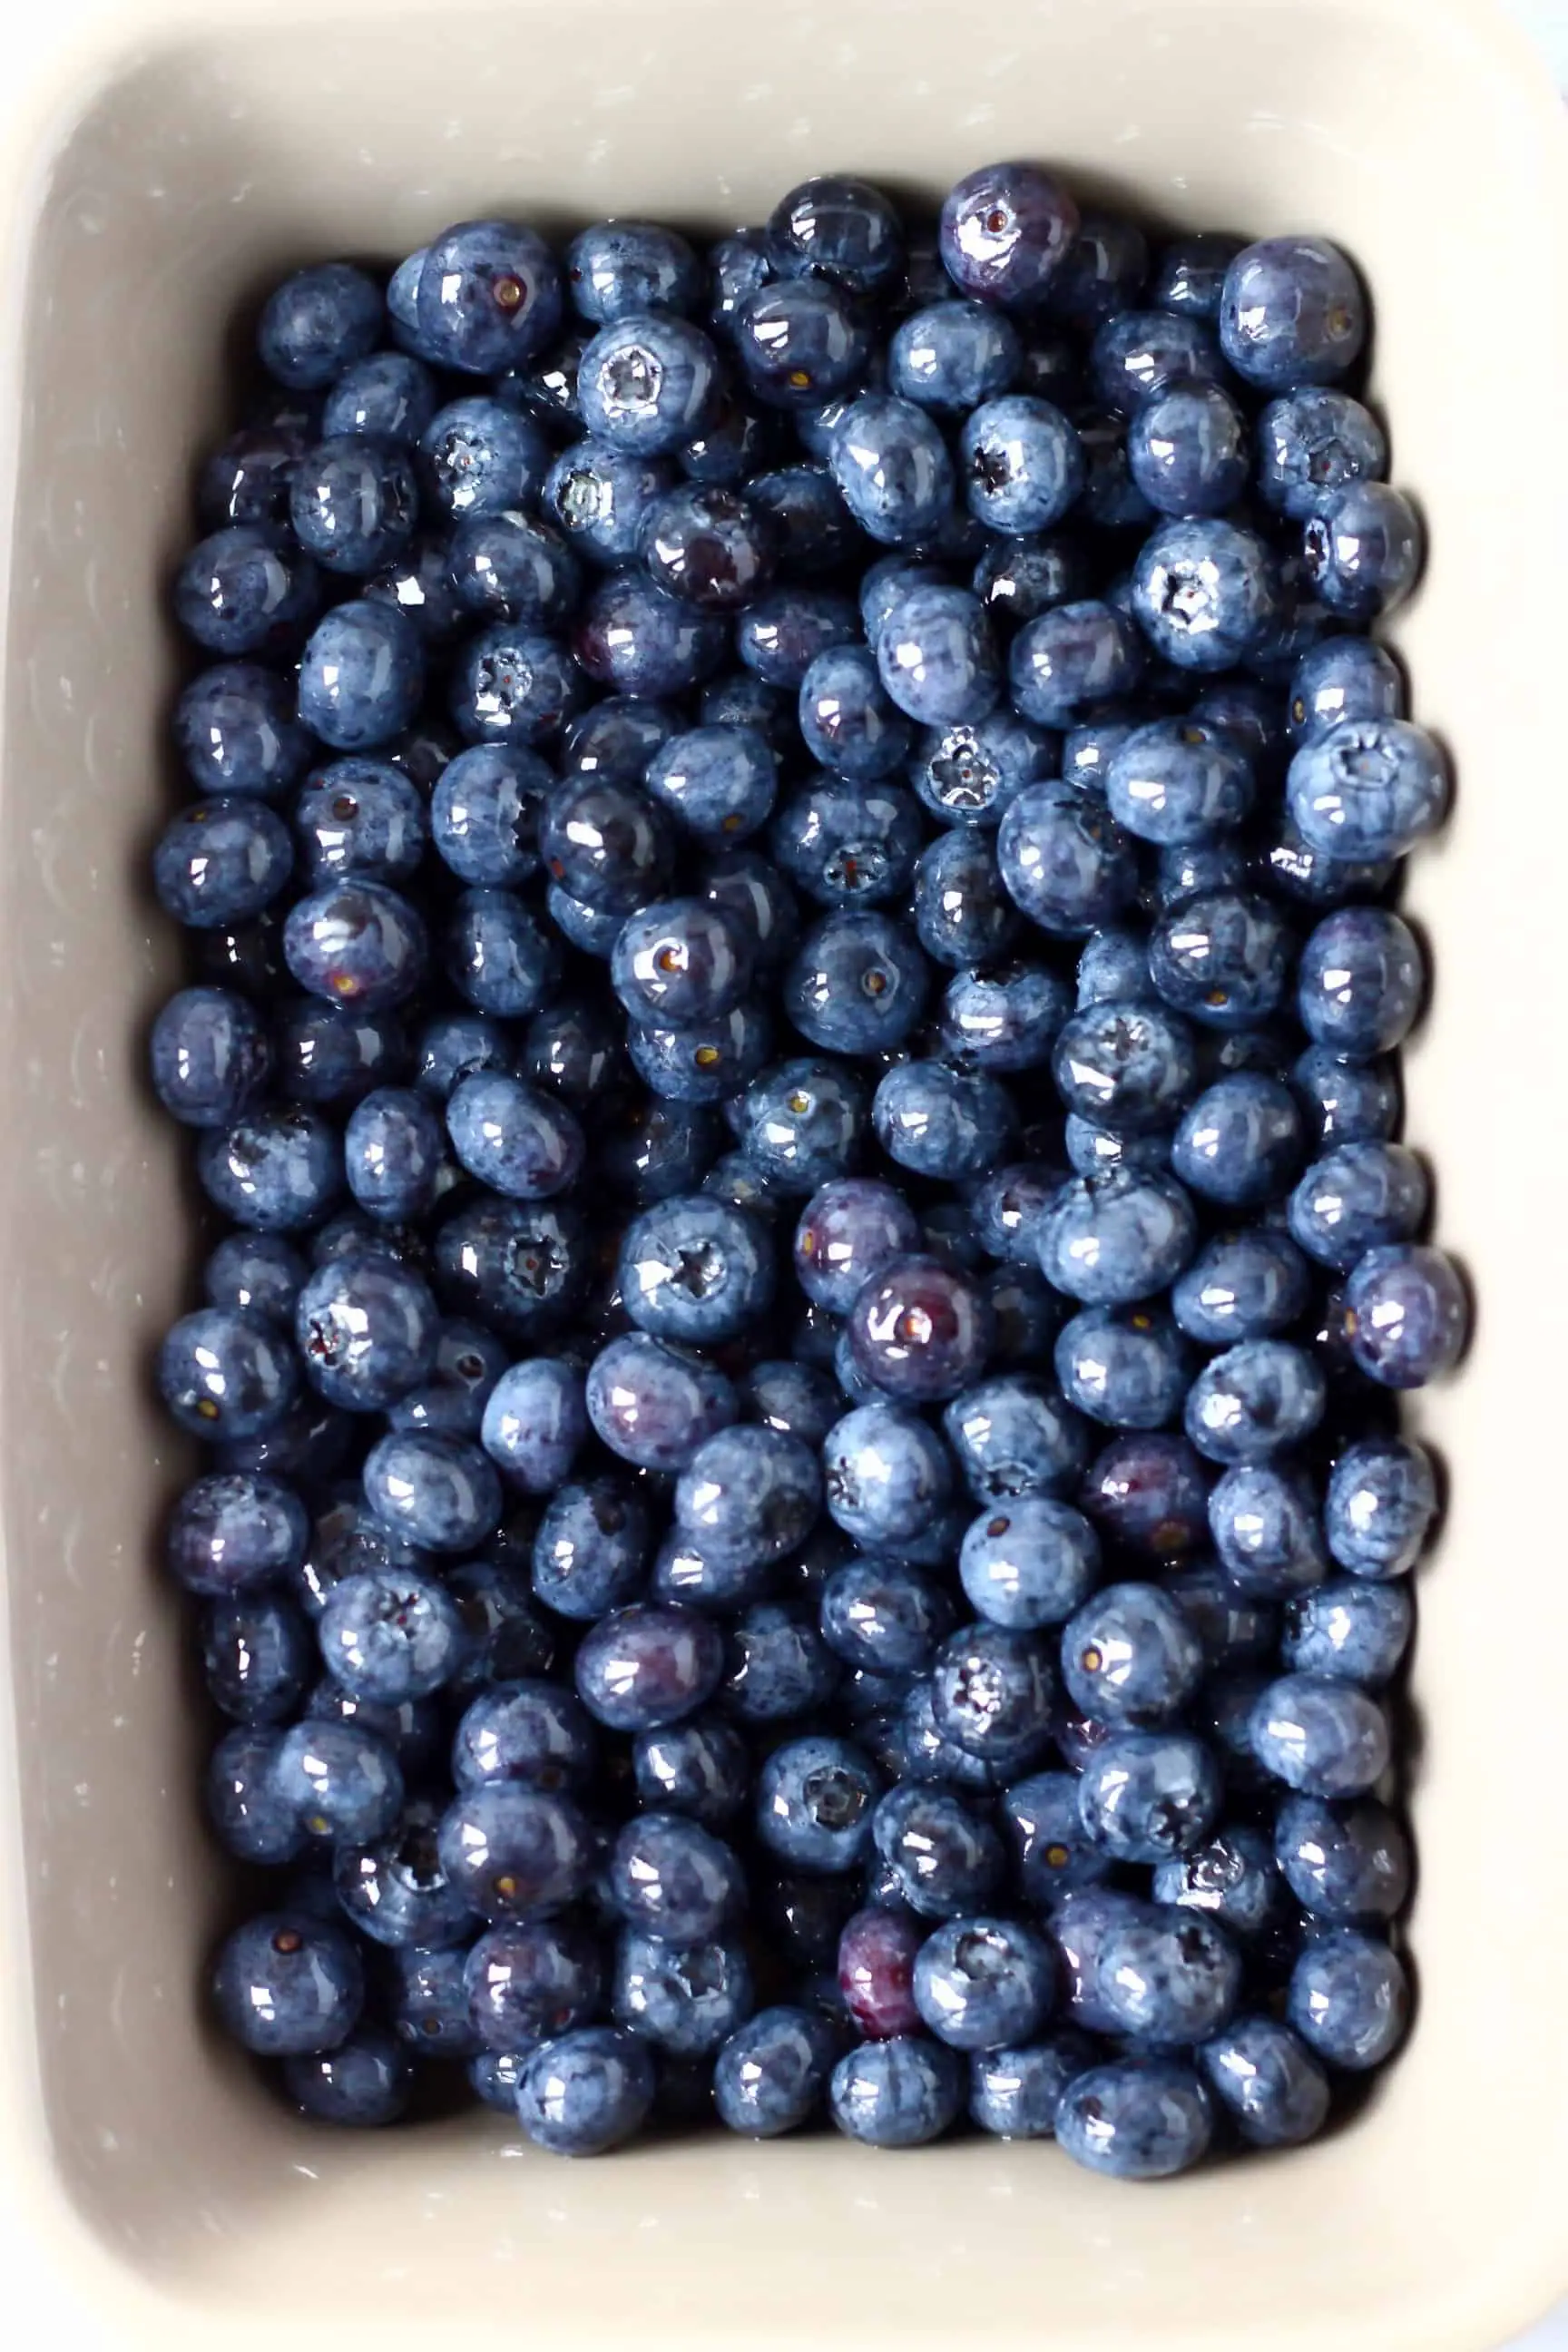 Blueberries in a grey rectangular baking dish